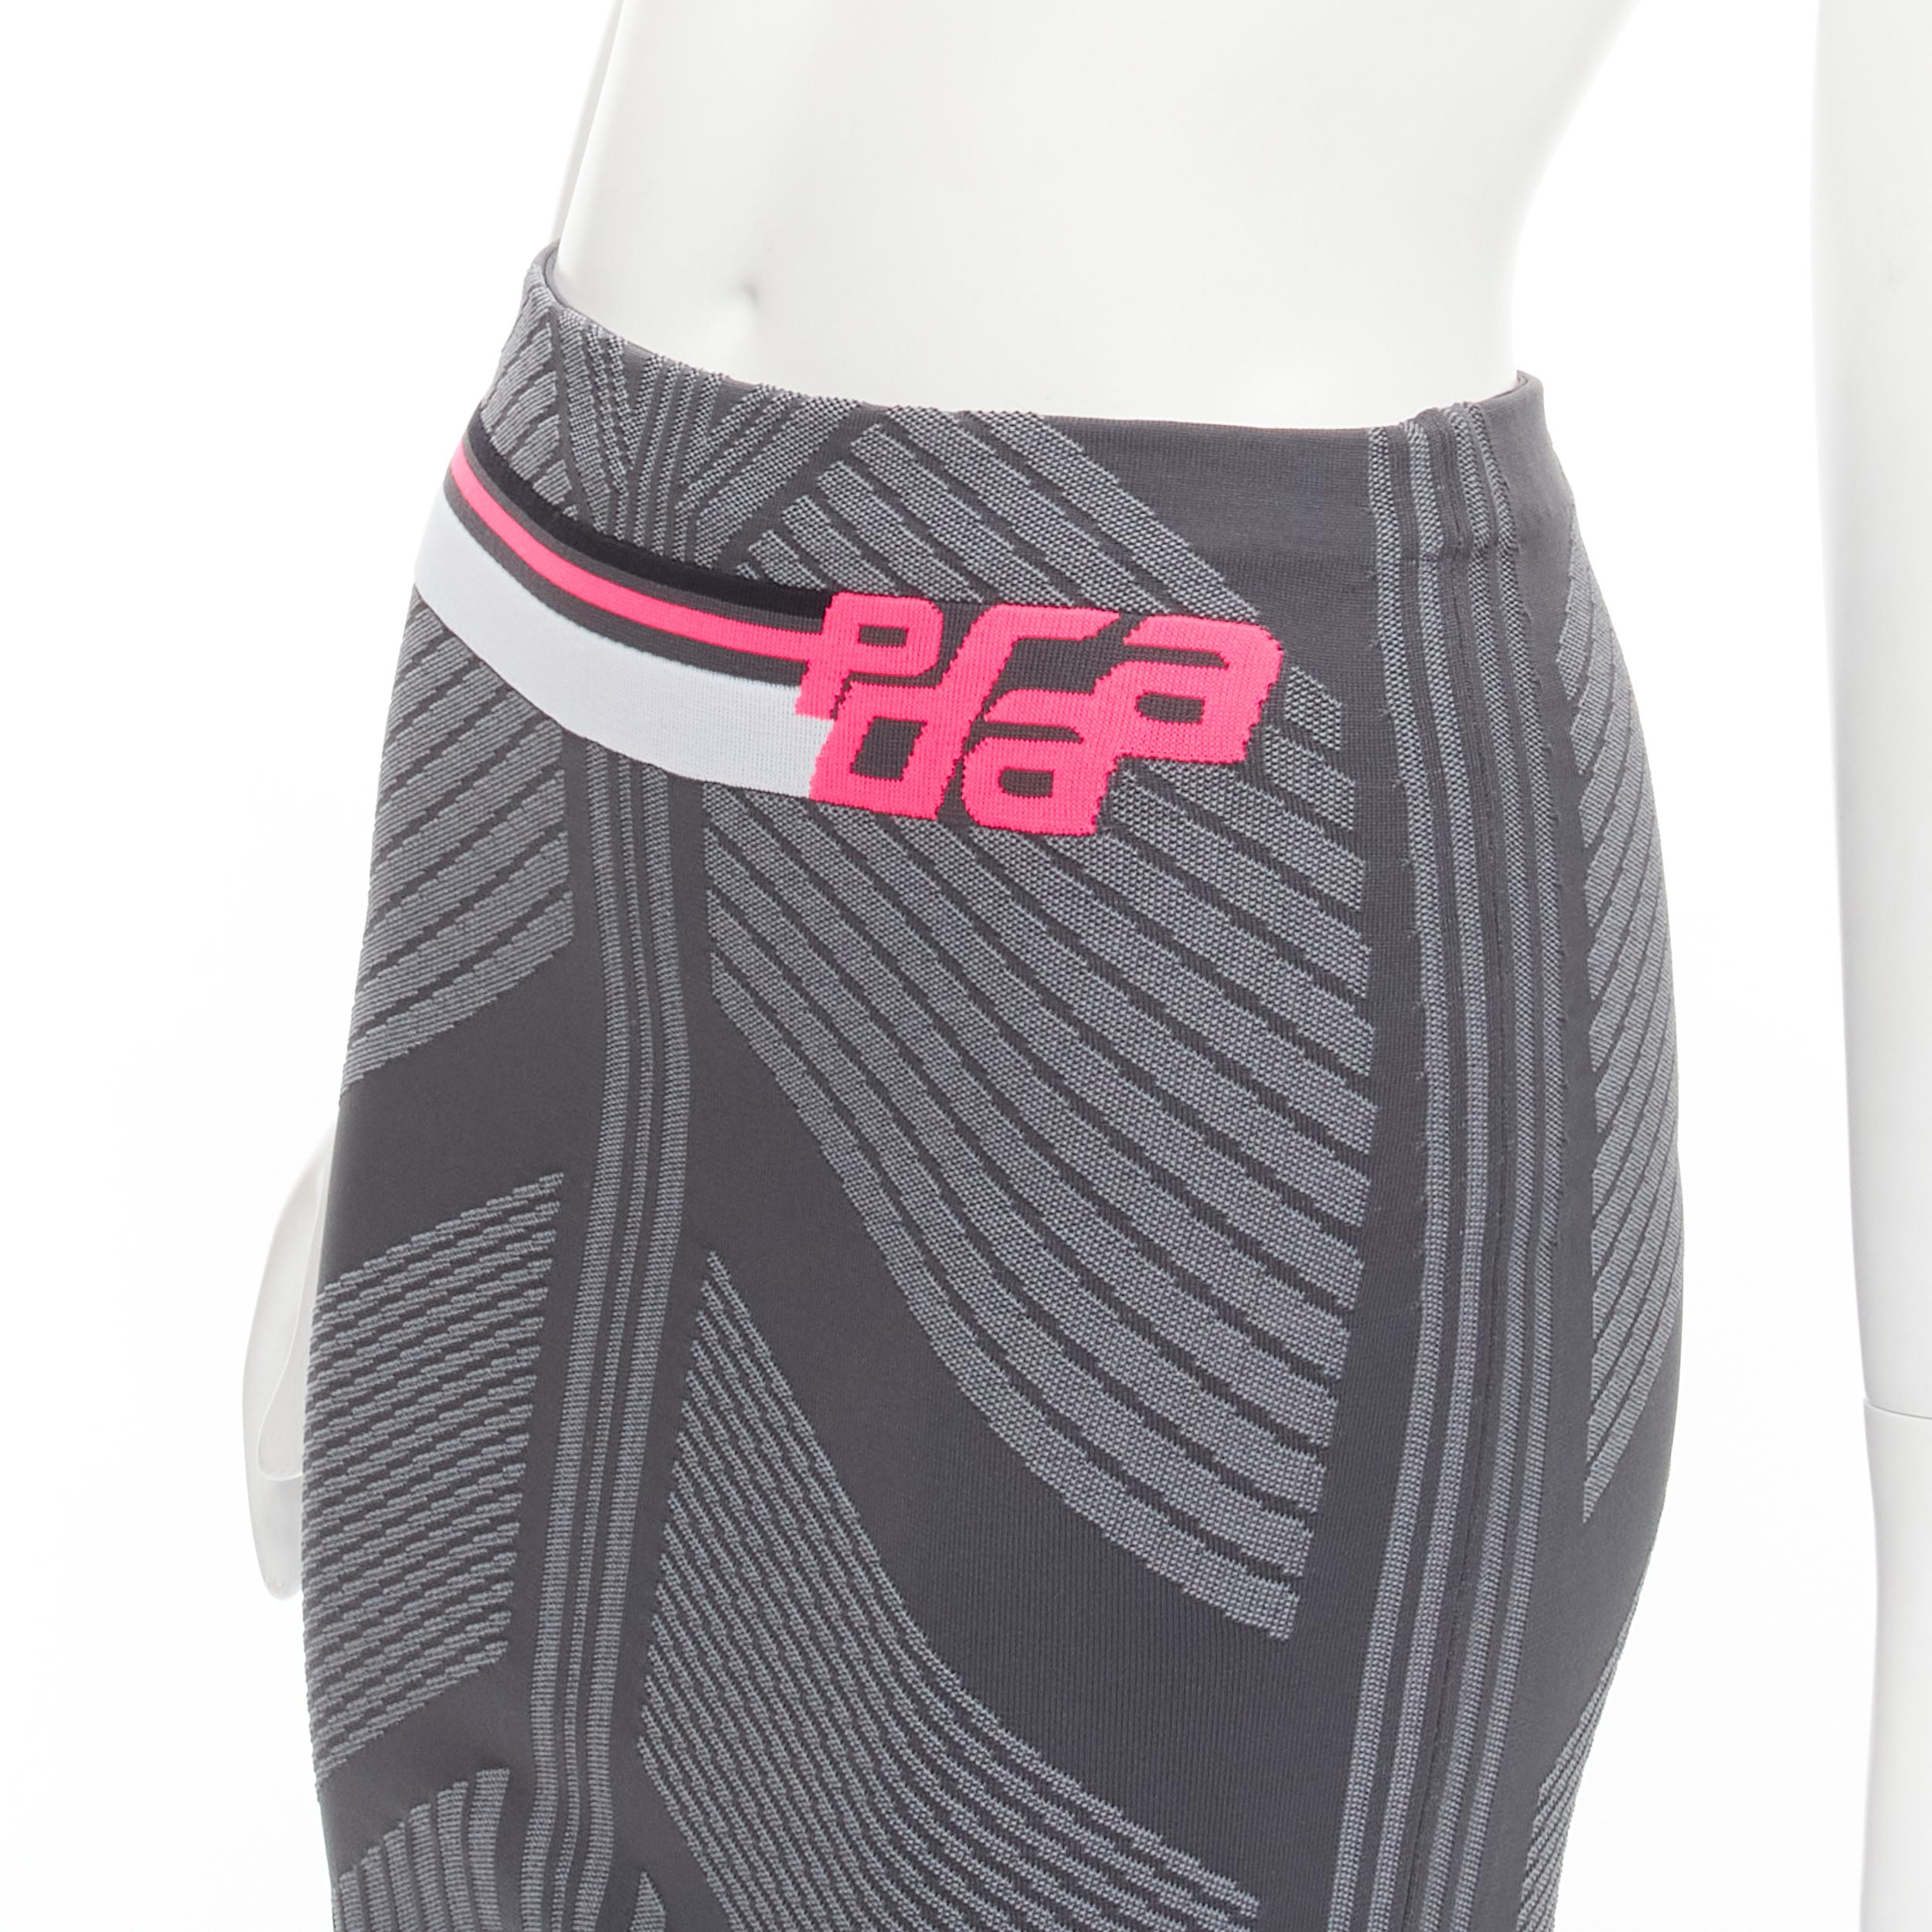 PRADA 2018 pink Racing Logo grey graphic intarsia knit knee length skirt S
Brand: Prada
Designer: Miuccia Prada
Collection: 2018 
Color: Grey
Pattern: Solid
Closure: Lock
Extra Detail: Bodycon intarsia knit.

CONDITION:
Condition: Excellent, this